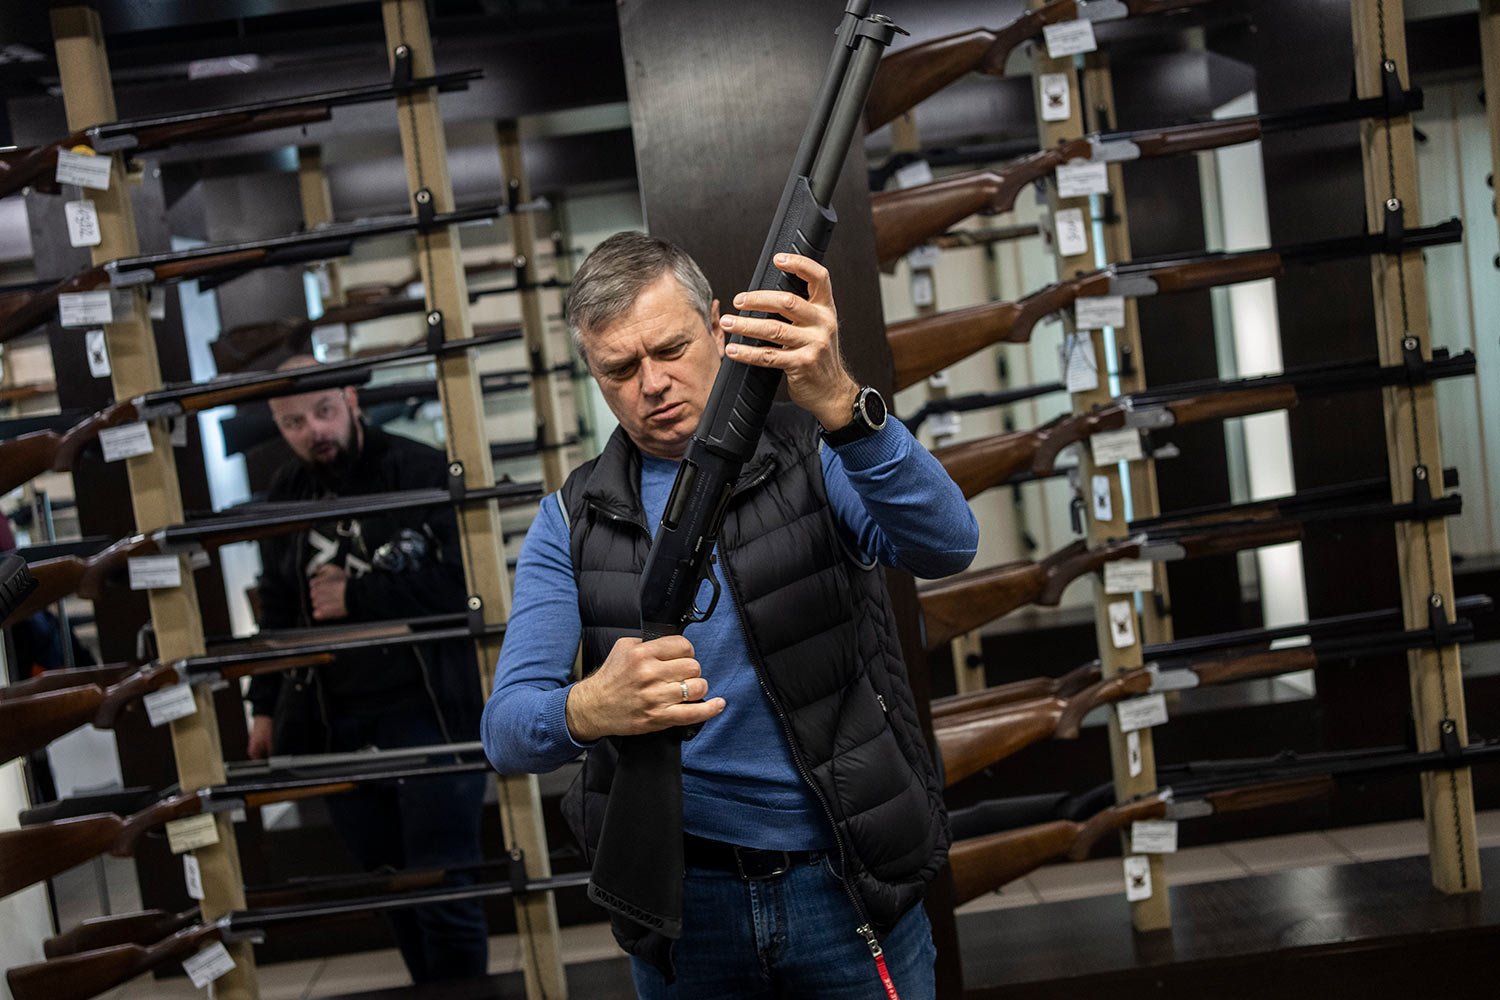  A customer checks his rifle in a gun shop in Lviv, western Ukraine, Wednesday, March 23, 2022. The rush for guns and gun training continued in the western city of Lviv. (AP Photo/Bernat Armangue) 